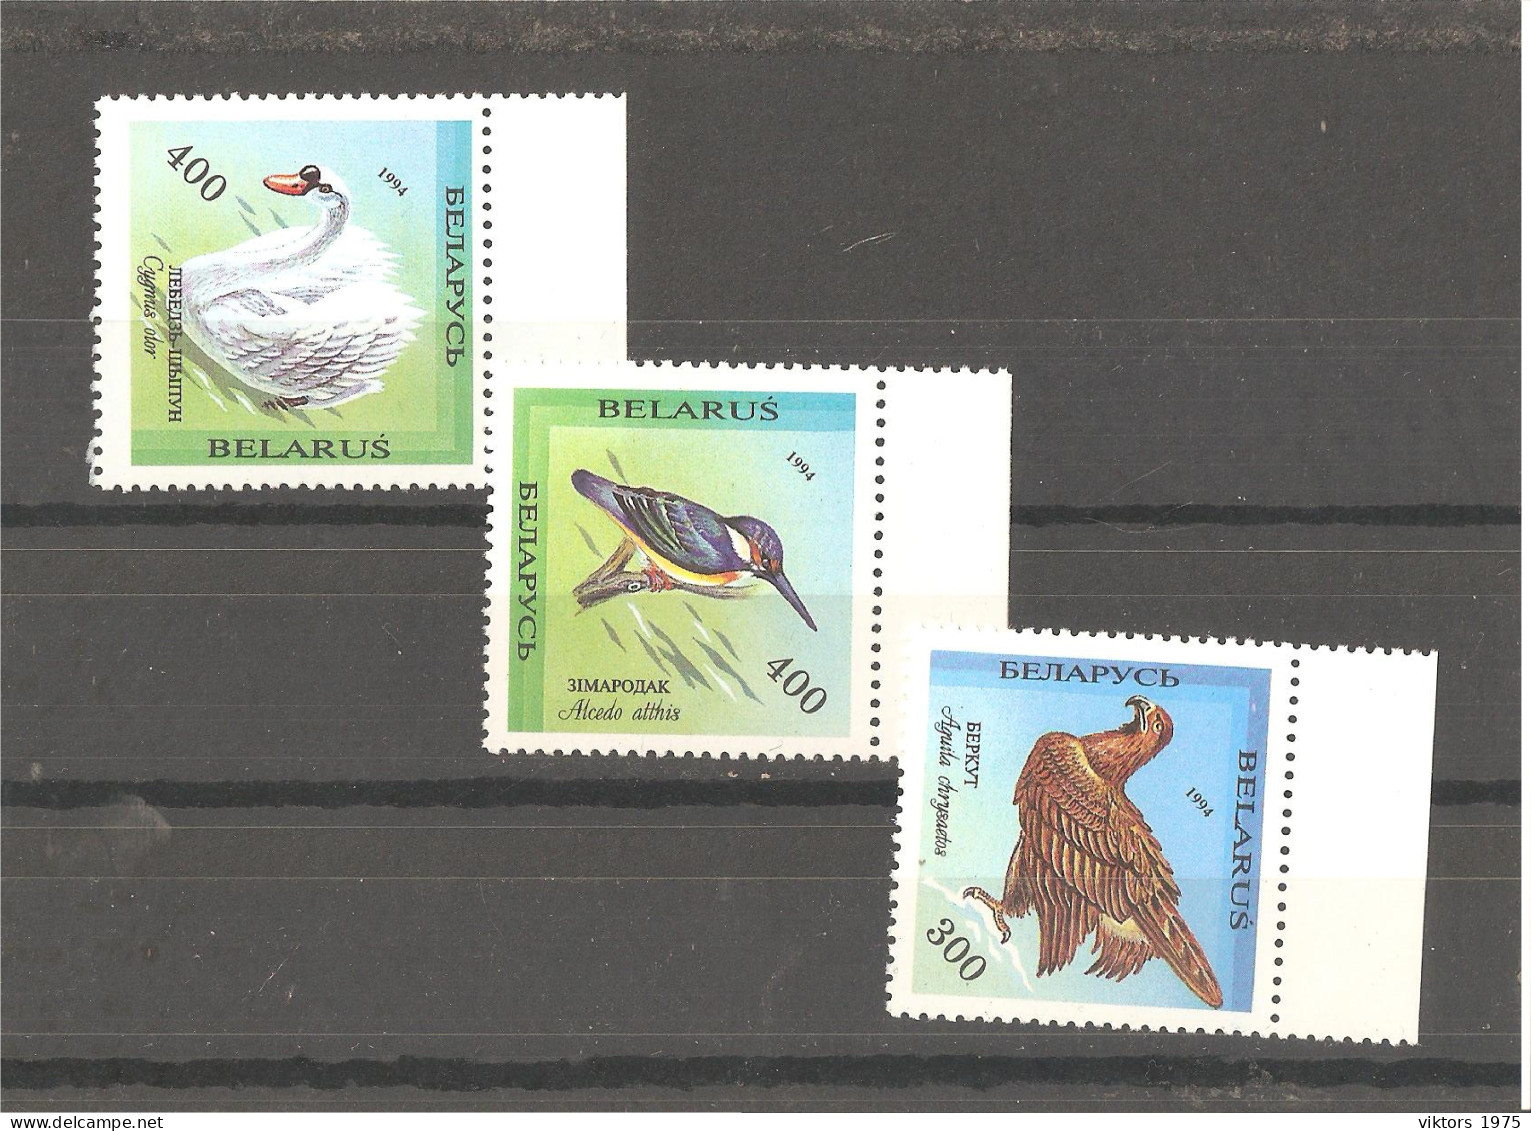 MNH Stamps Nr.69-71 In MICHEL Catalog - Belarus